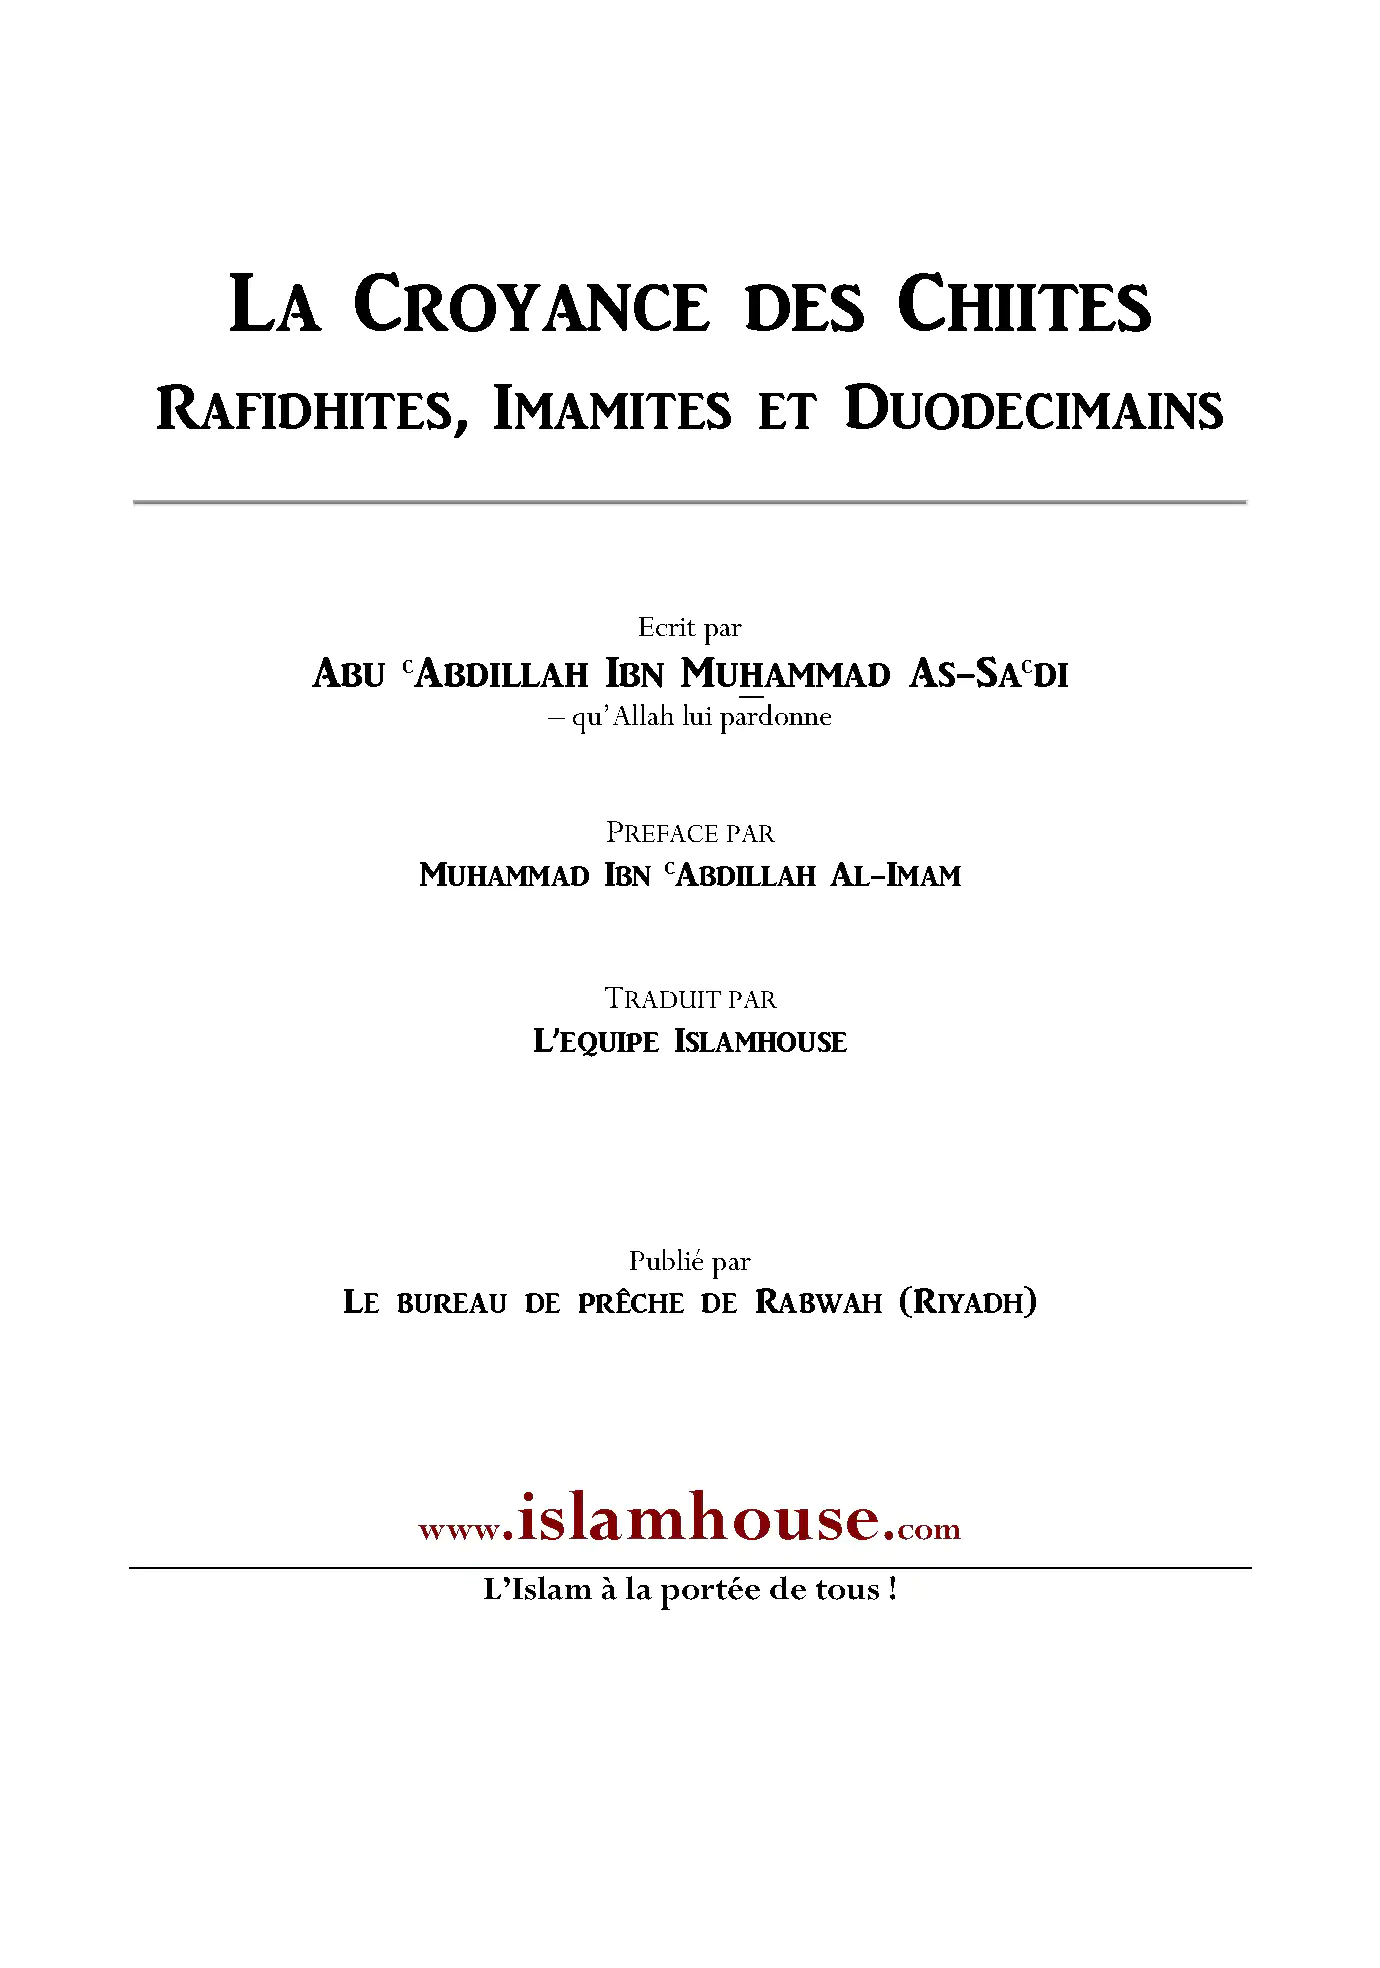 La croyance des Chiites, Rafidhites, Imamites et Duodécimains